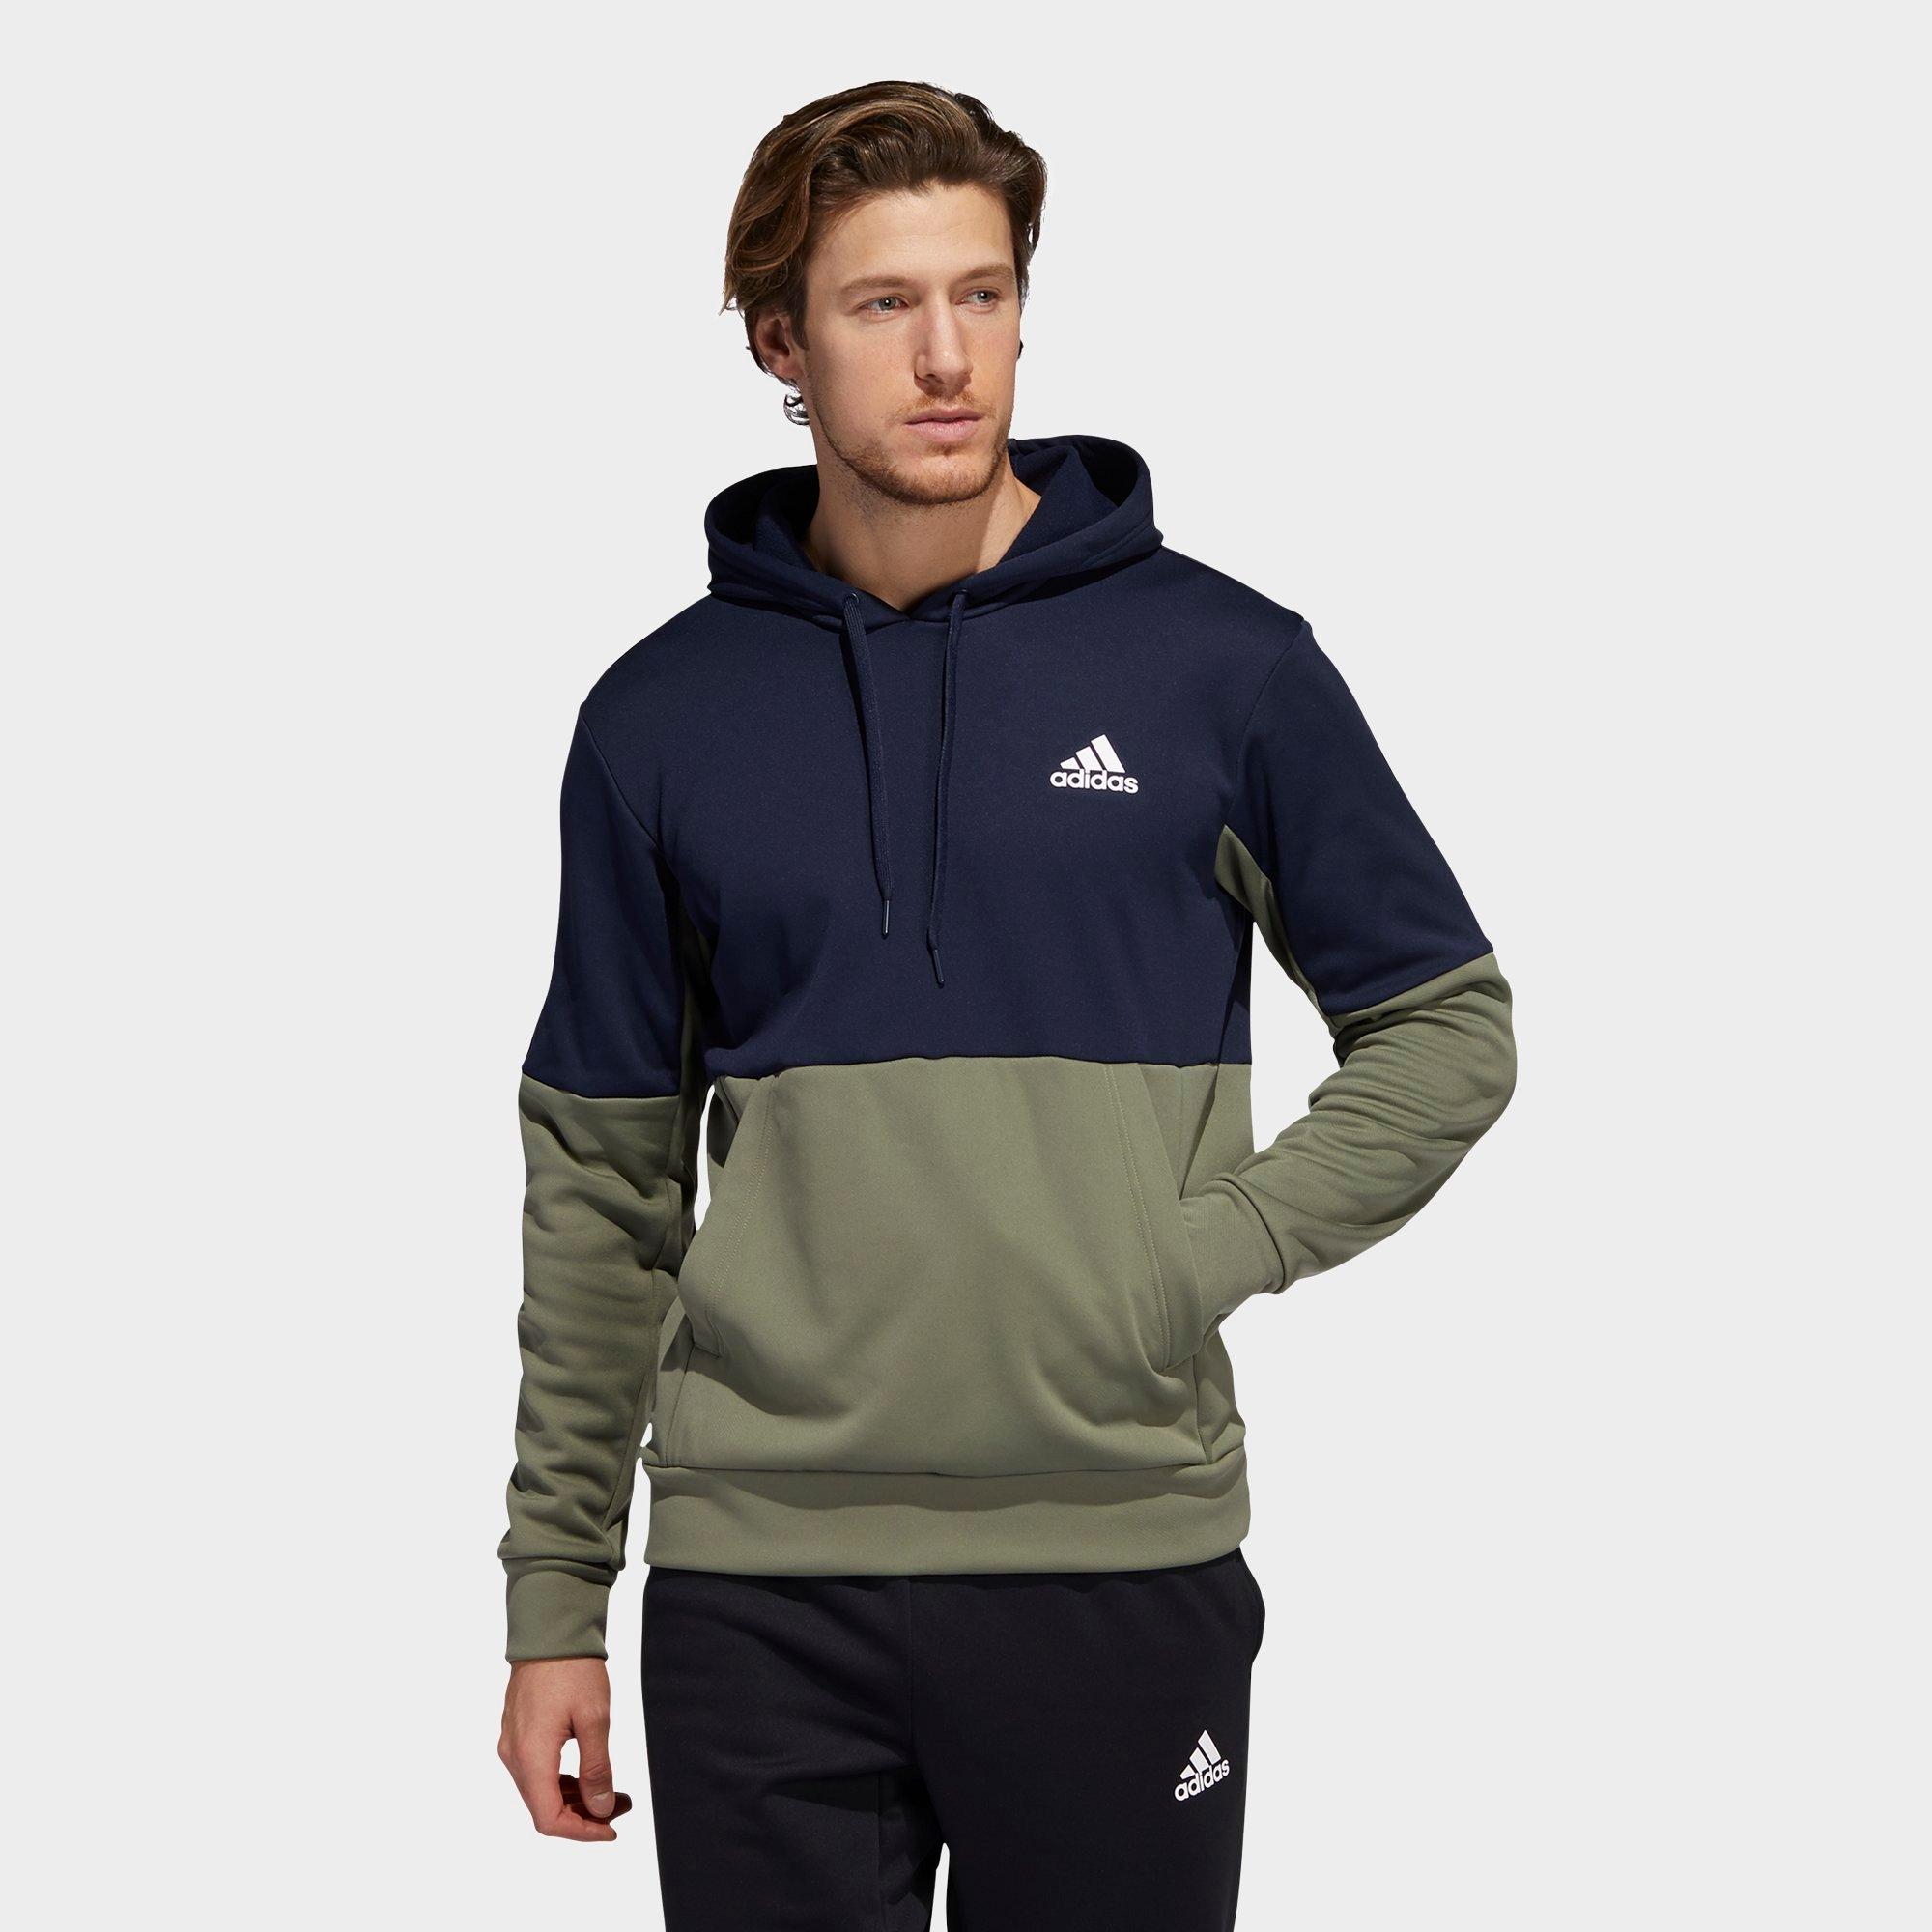 adidas team issue sweatshirt